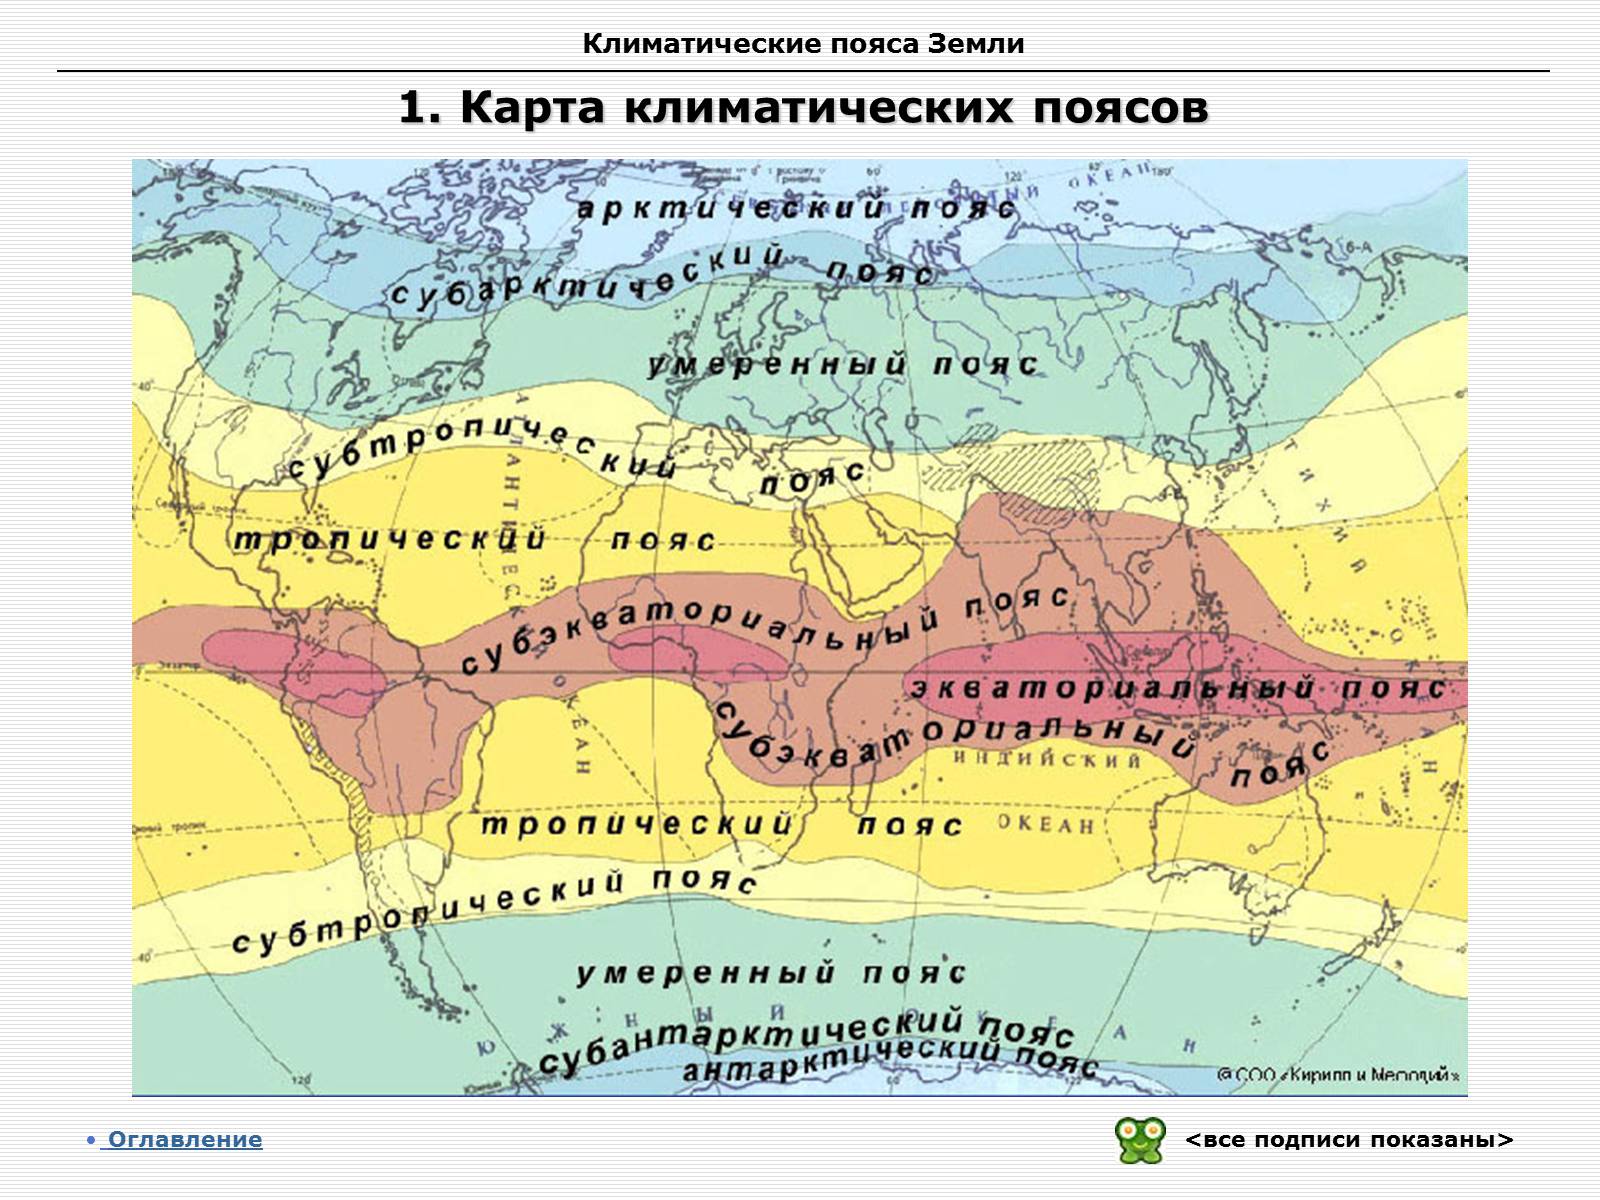 Пояса карта казахстана